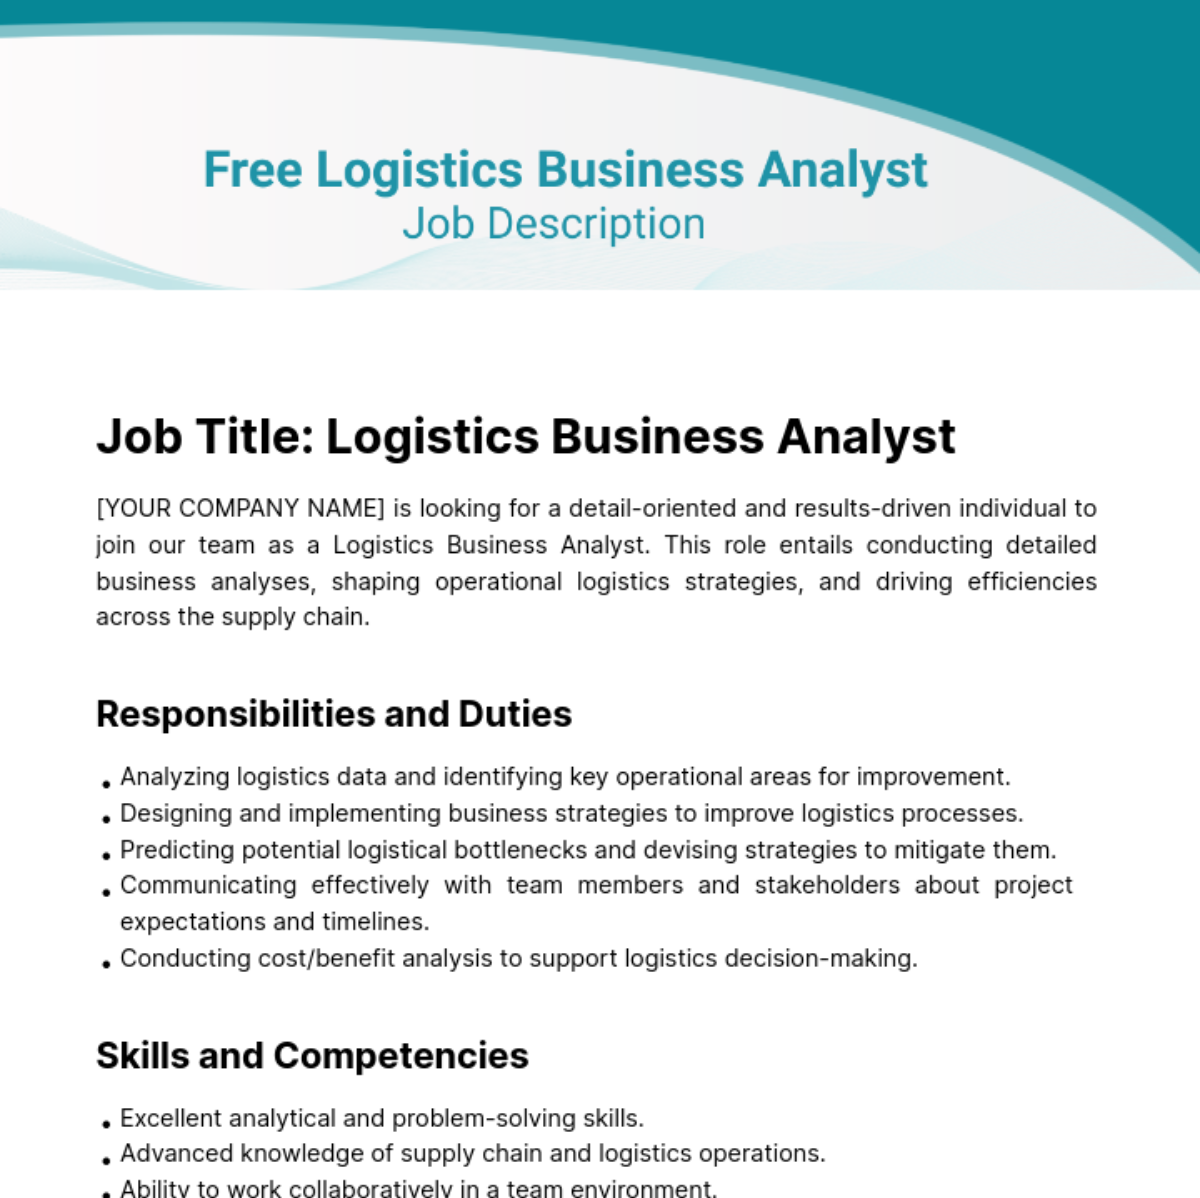 Free Logistics Business Analyst Job Description Template